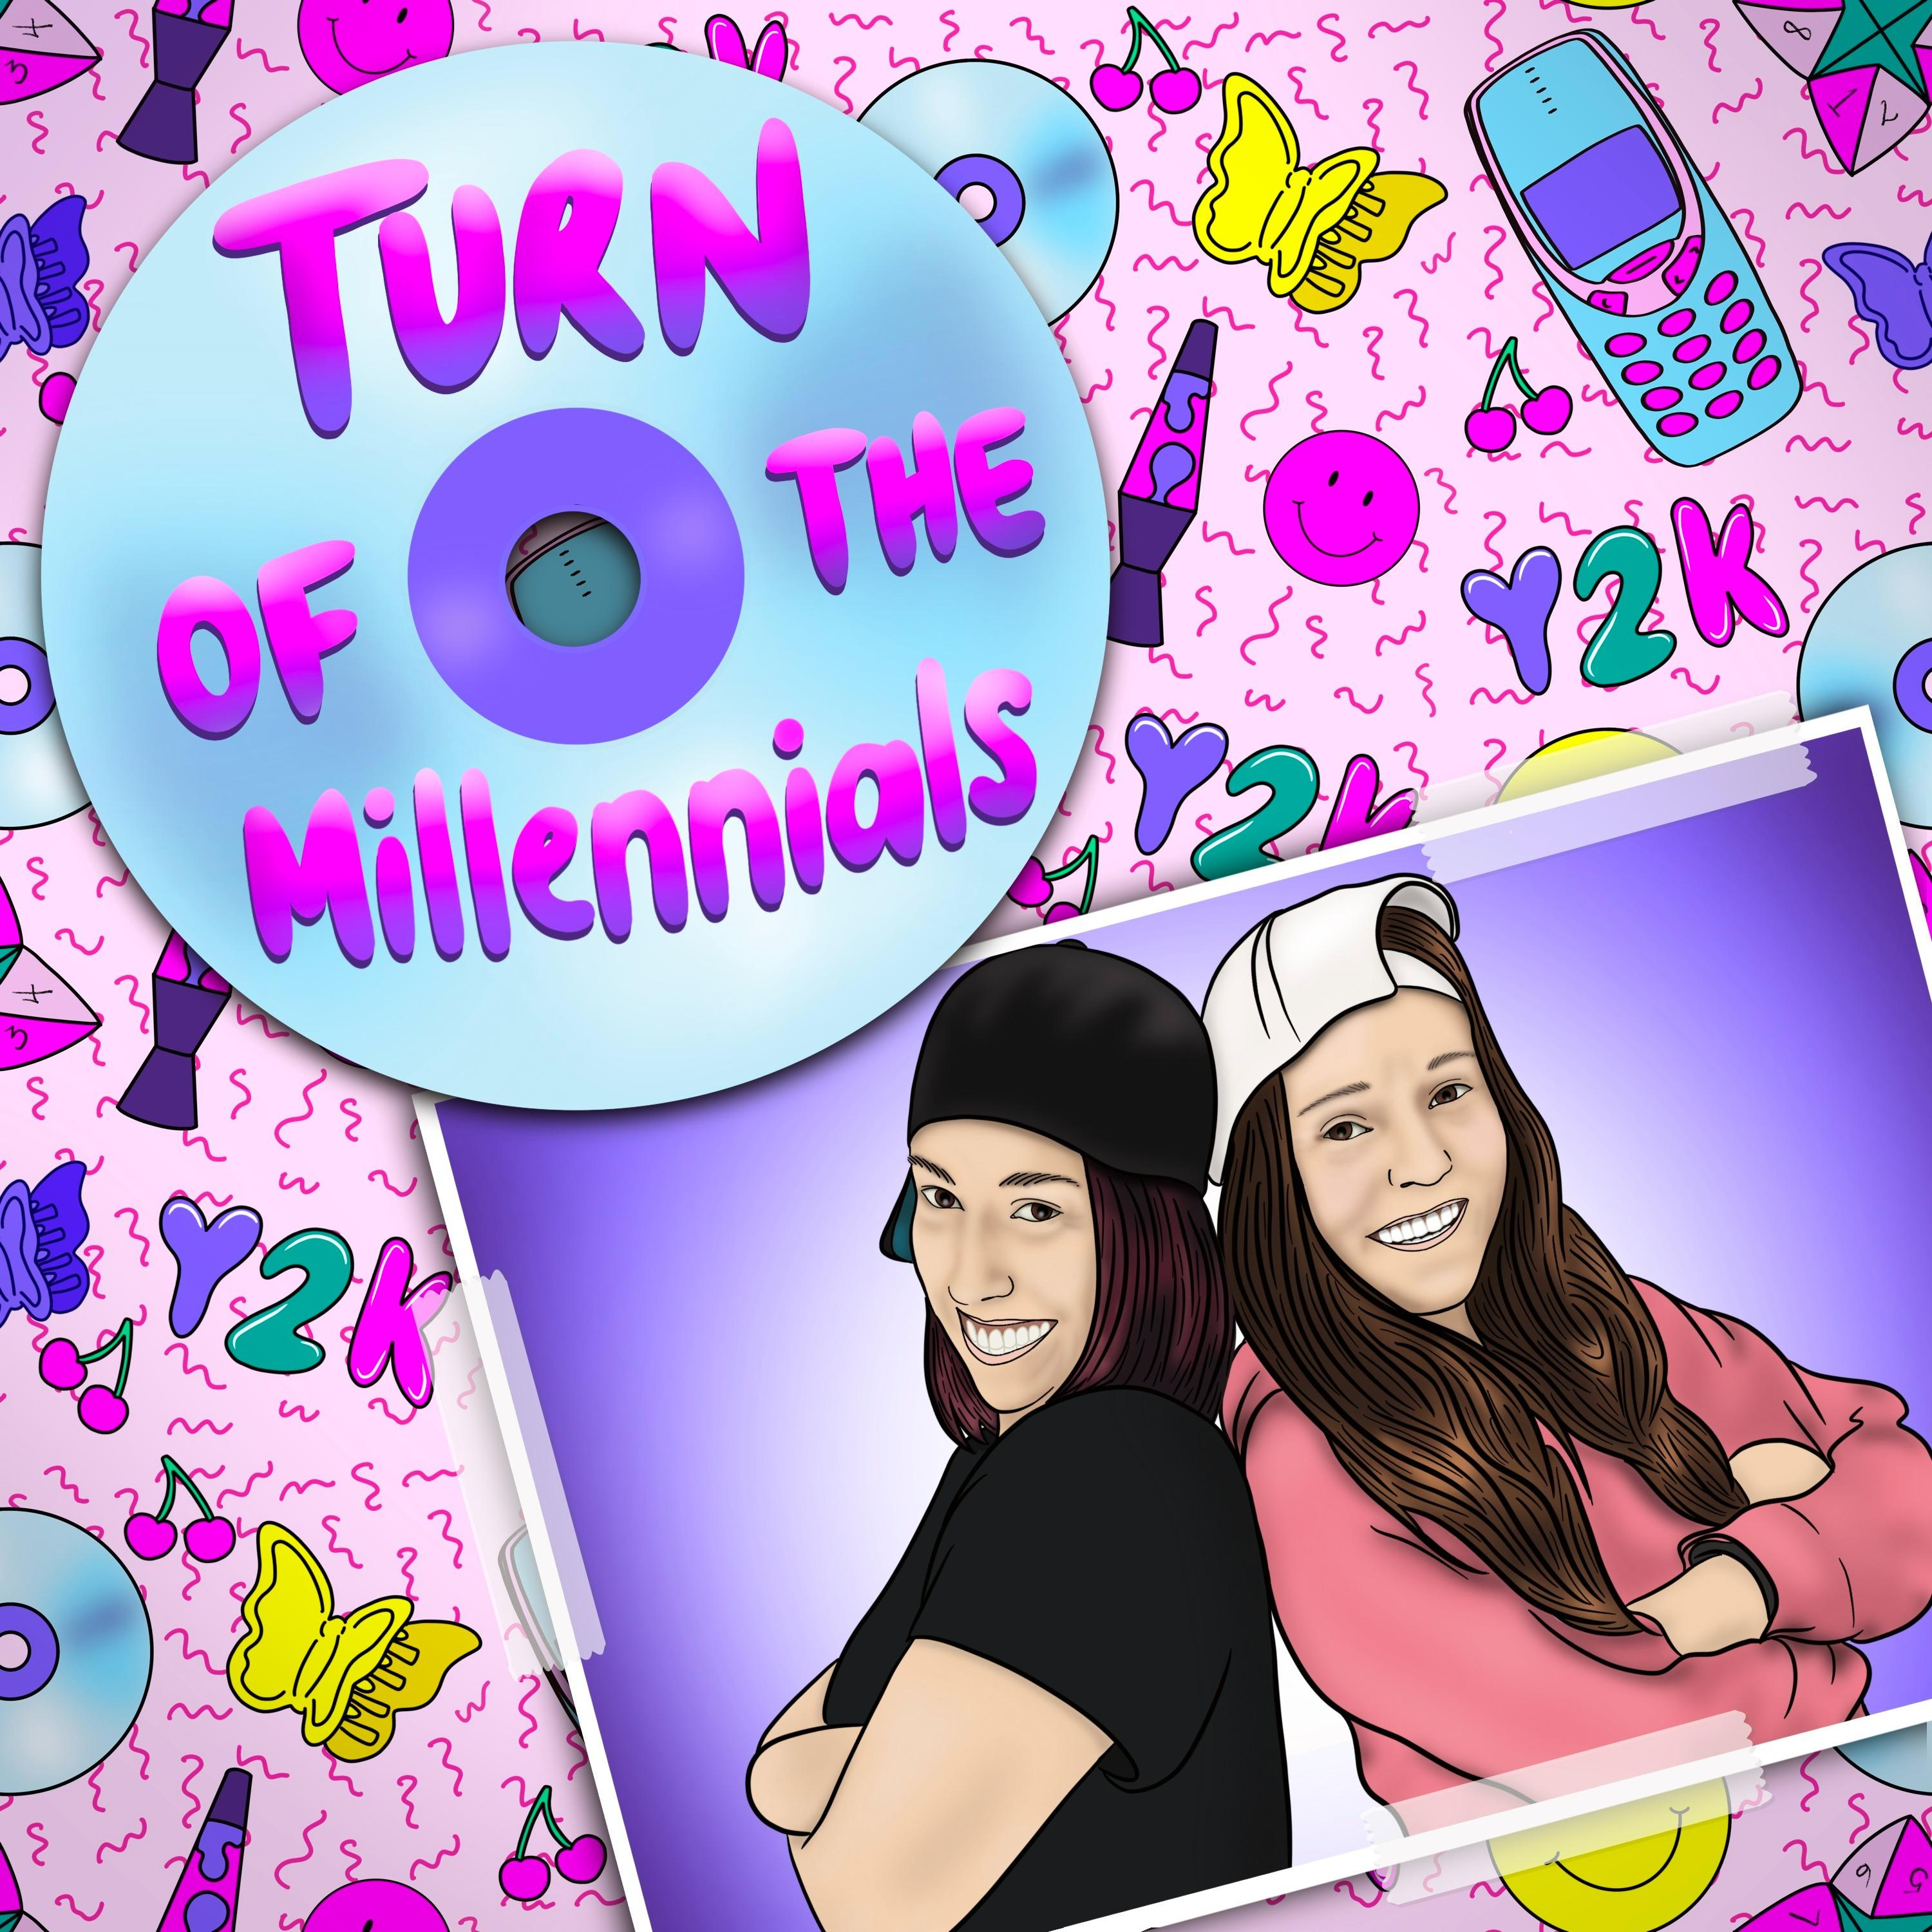 Turn of the Millennials